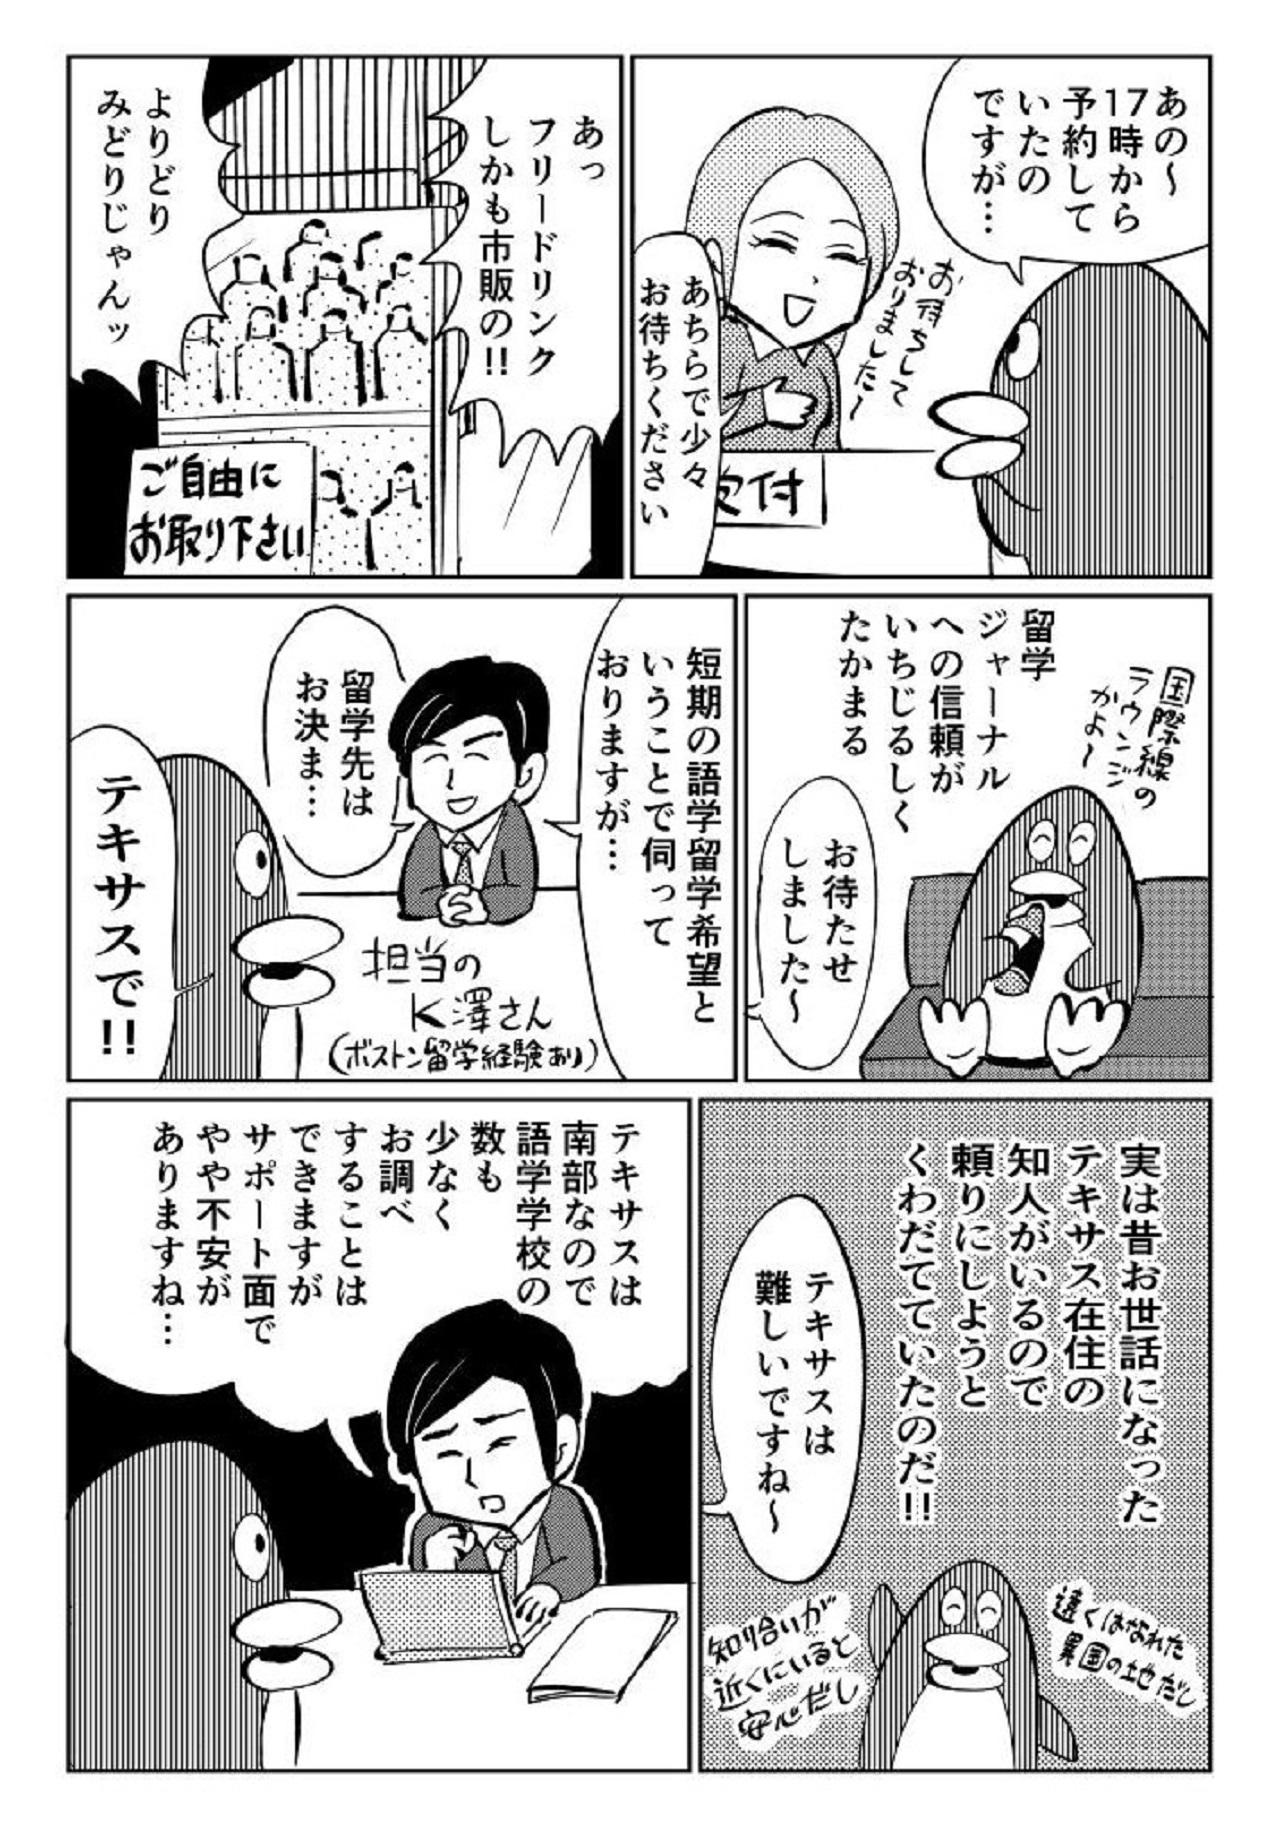 https://www.ryugaku.co.jp/column/images/34sai_3_1280.jpg